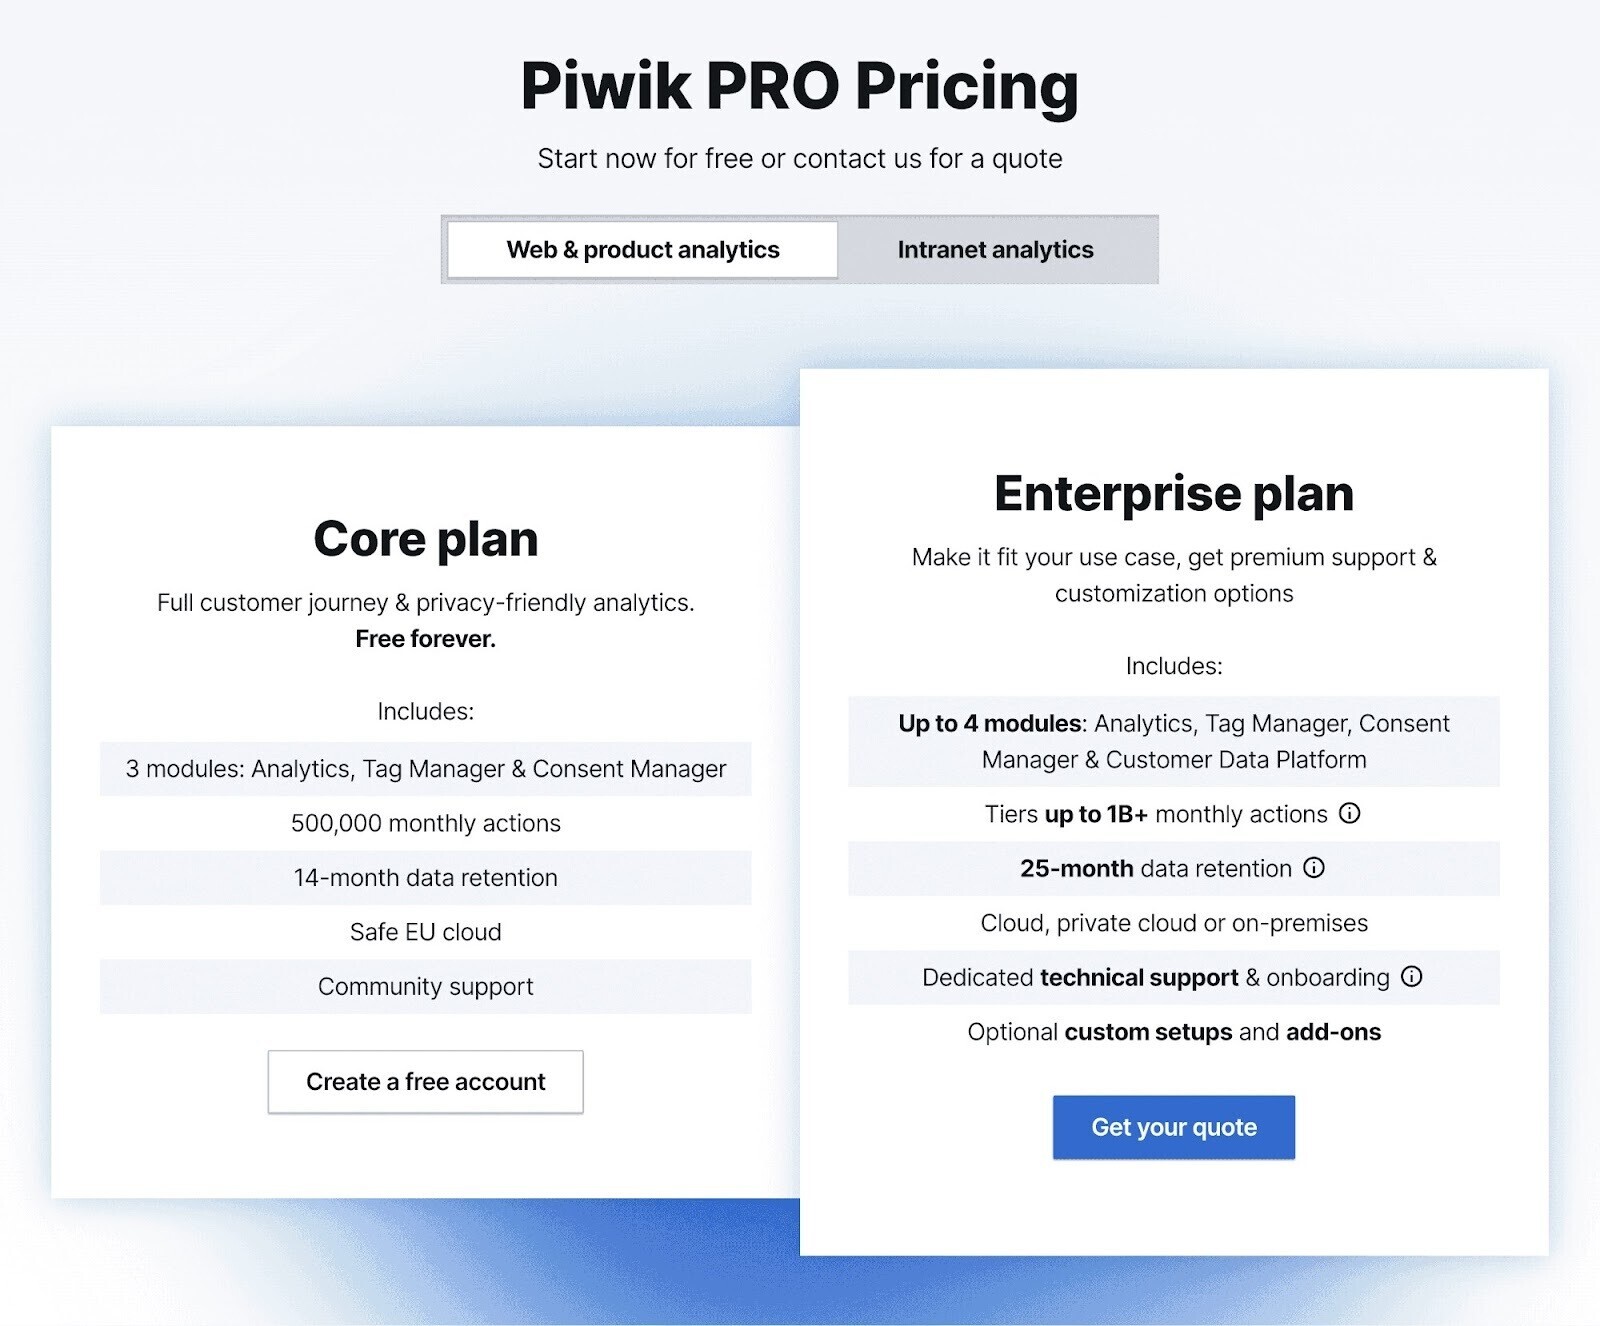 Piwik PRO pricing